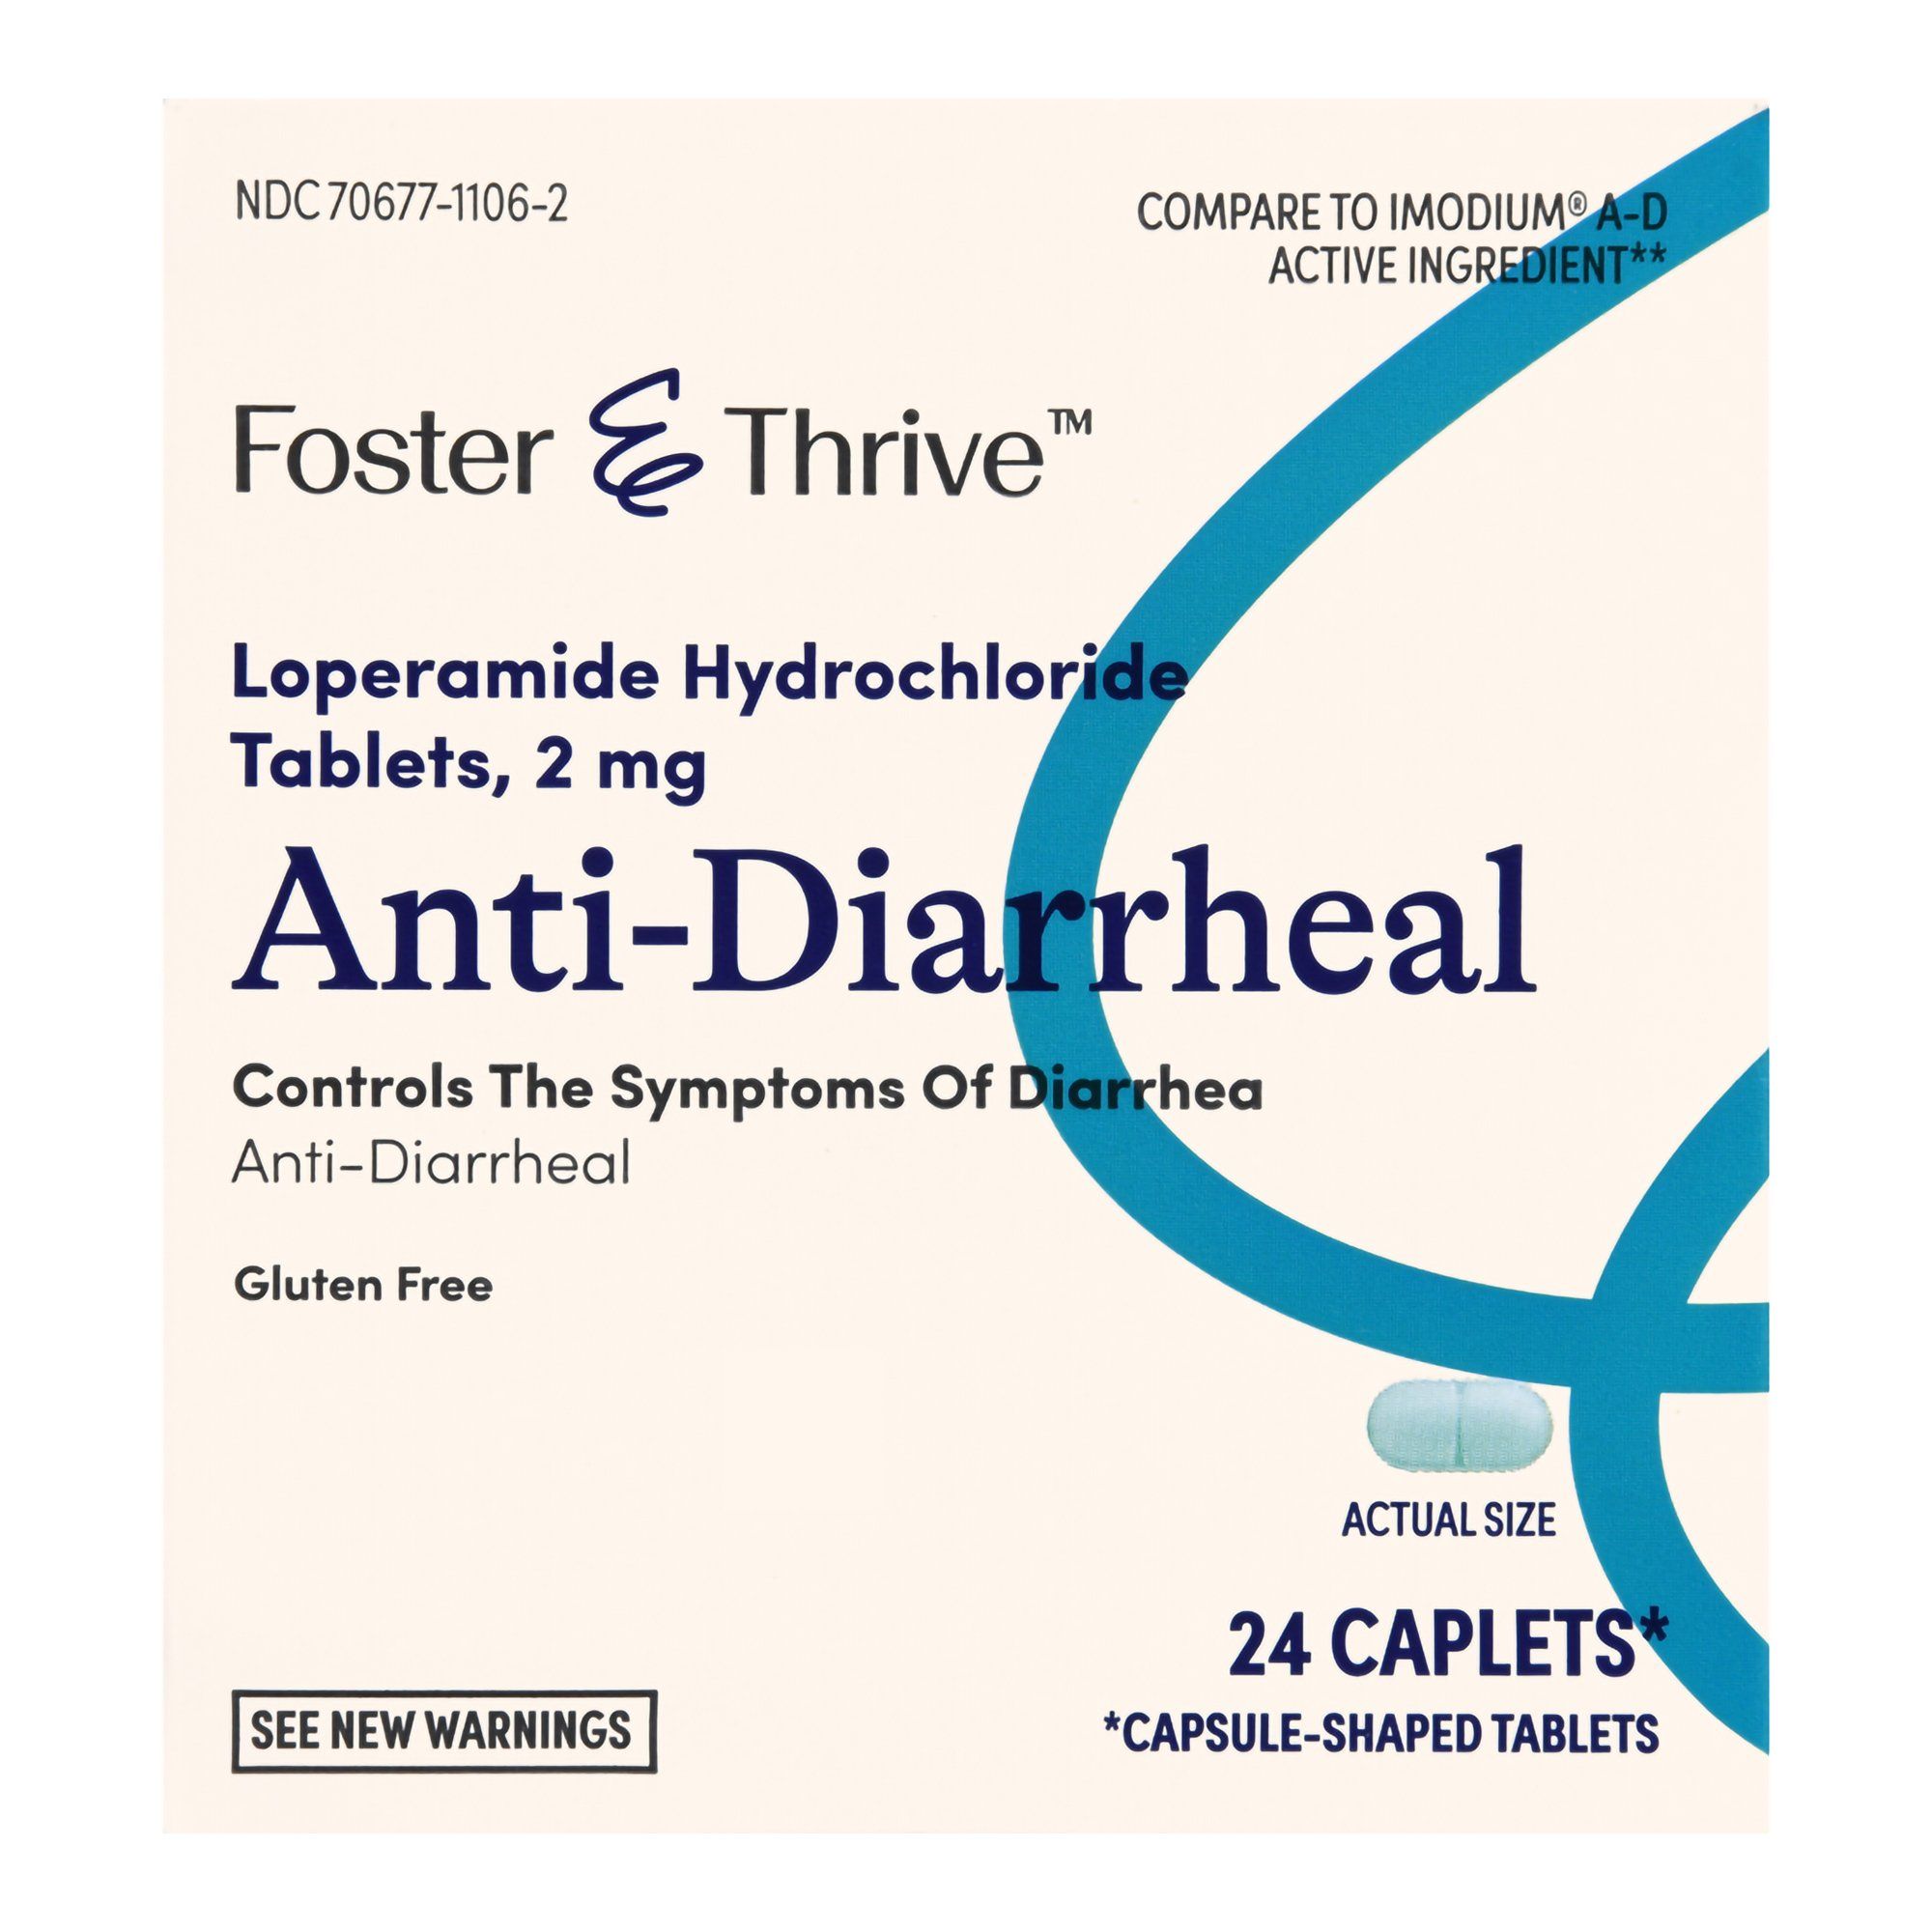 Foster & Thrive Anti-Diarrheal Loperamide HCl Caplets, 2 mg - 24 ct